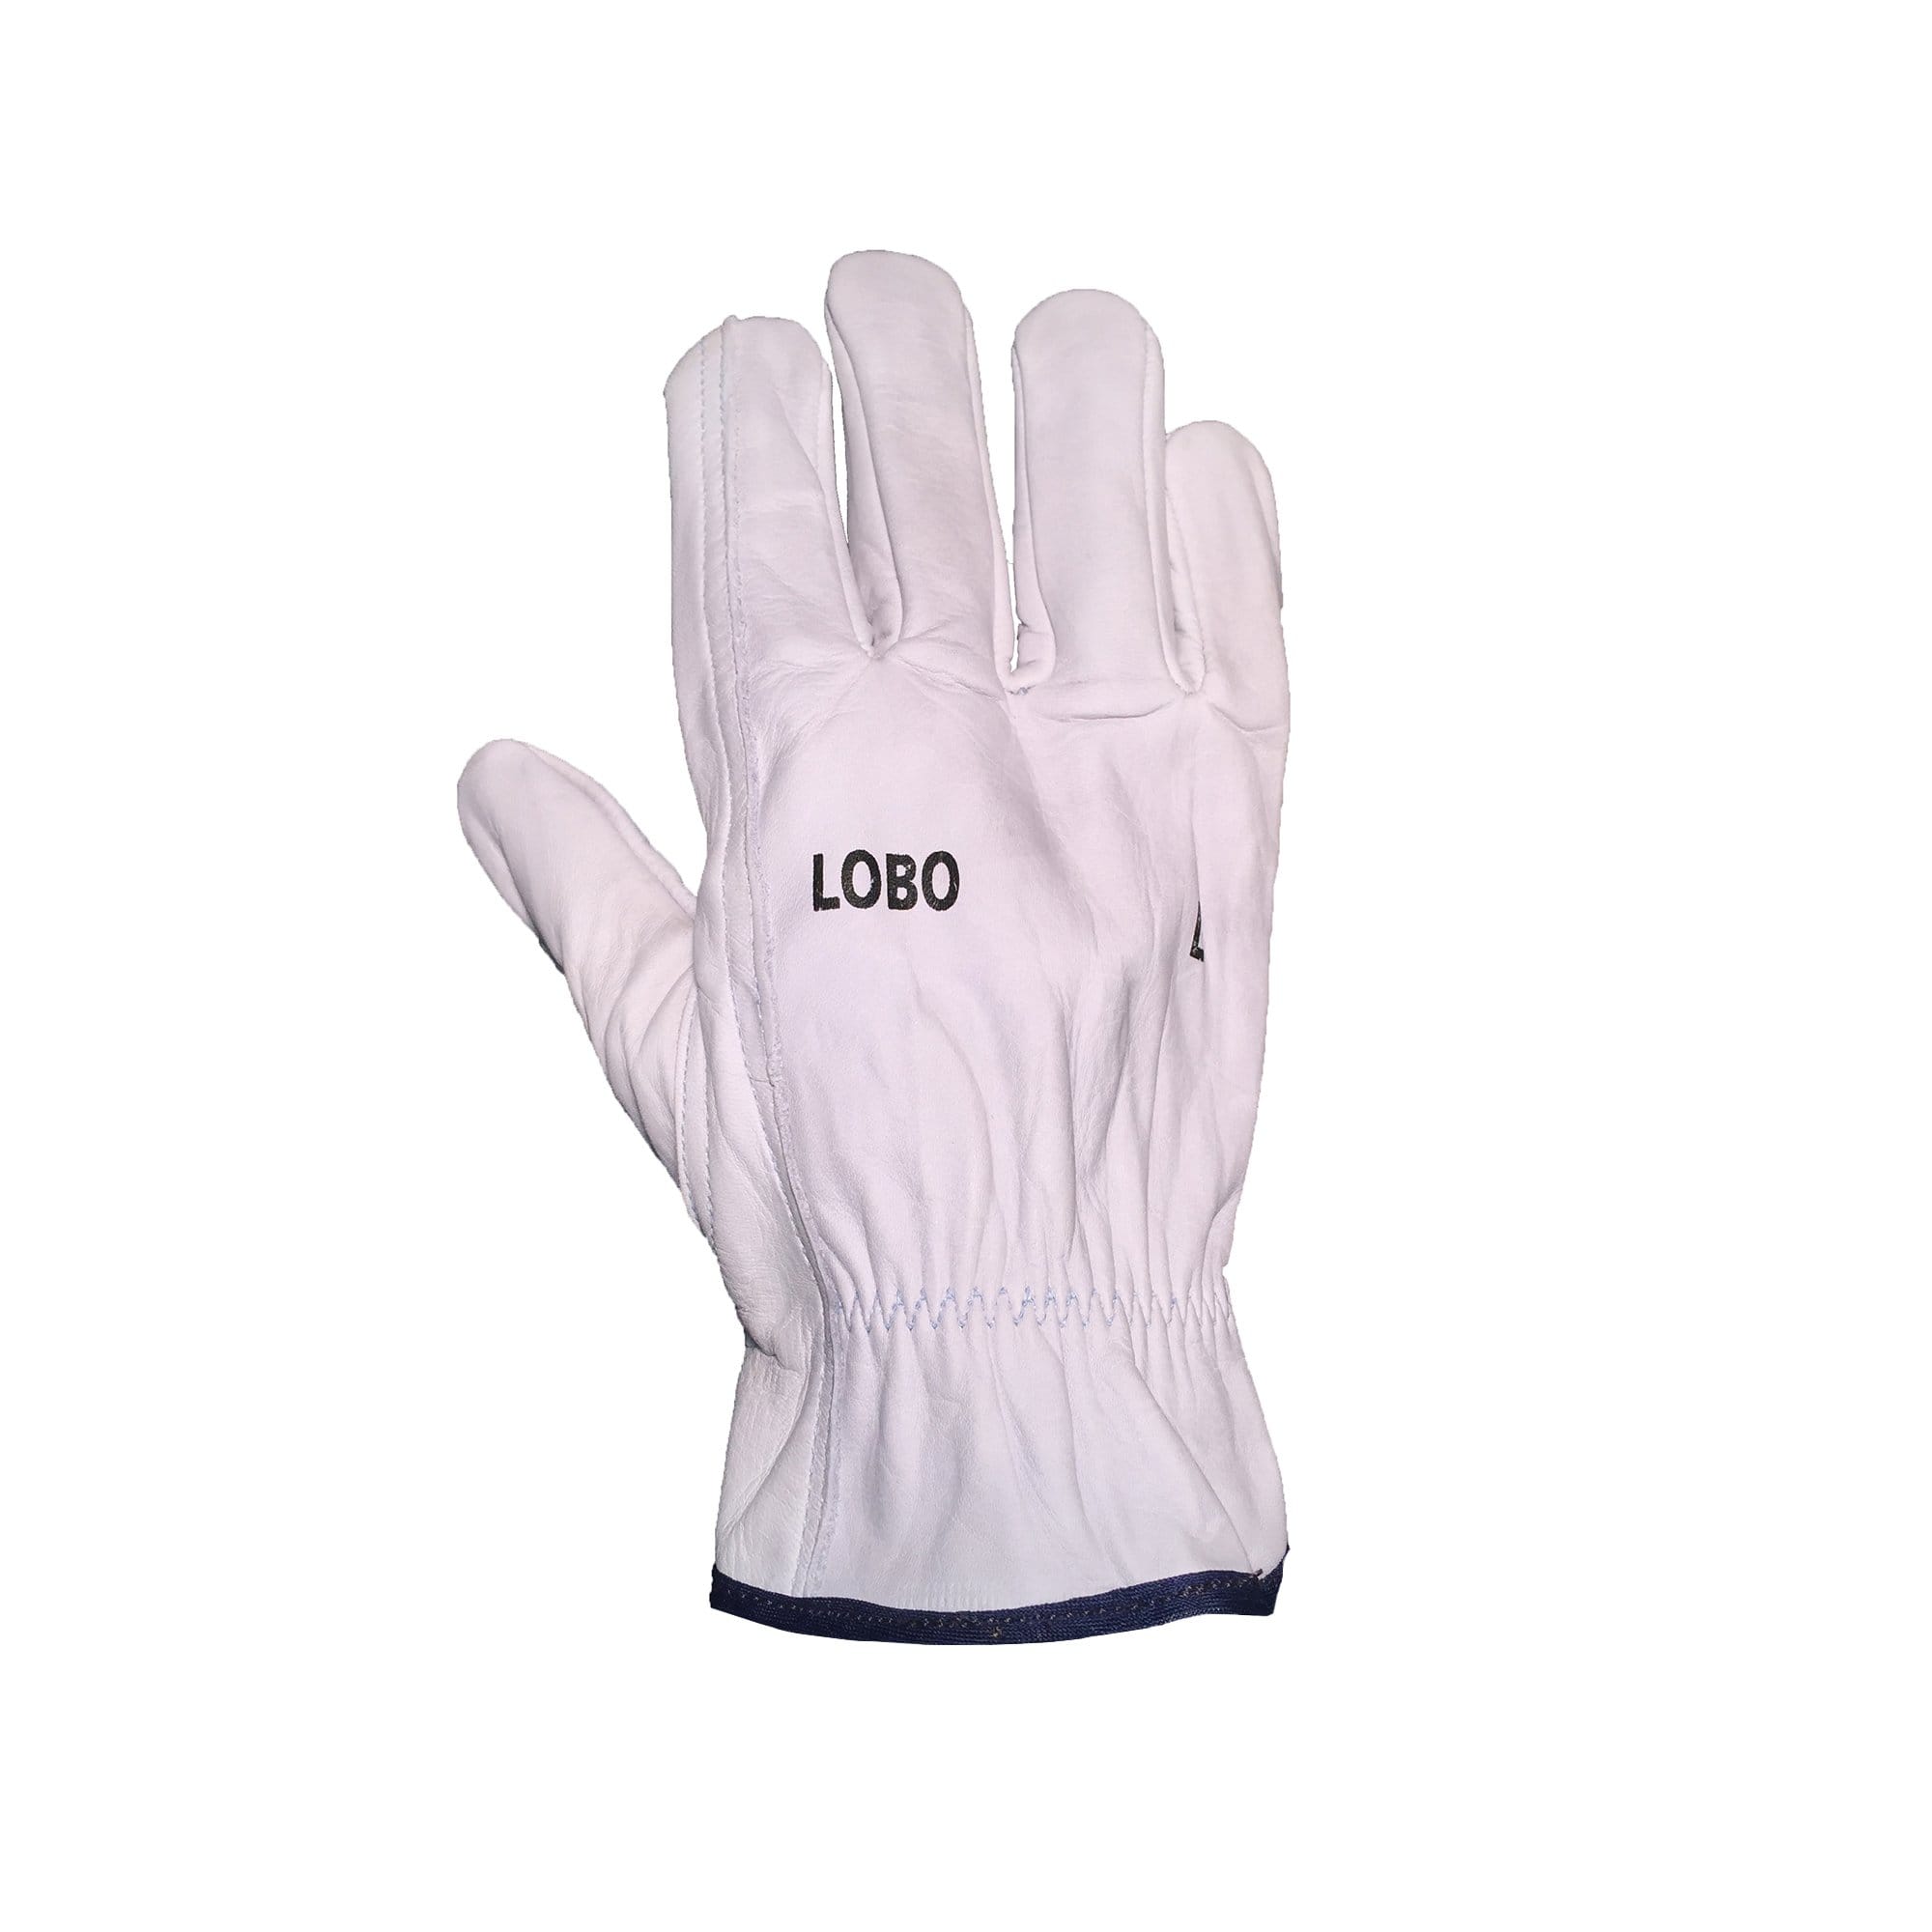 Lobo leather driver gloves - cowhide leather - lobo keystone thumb